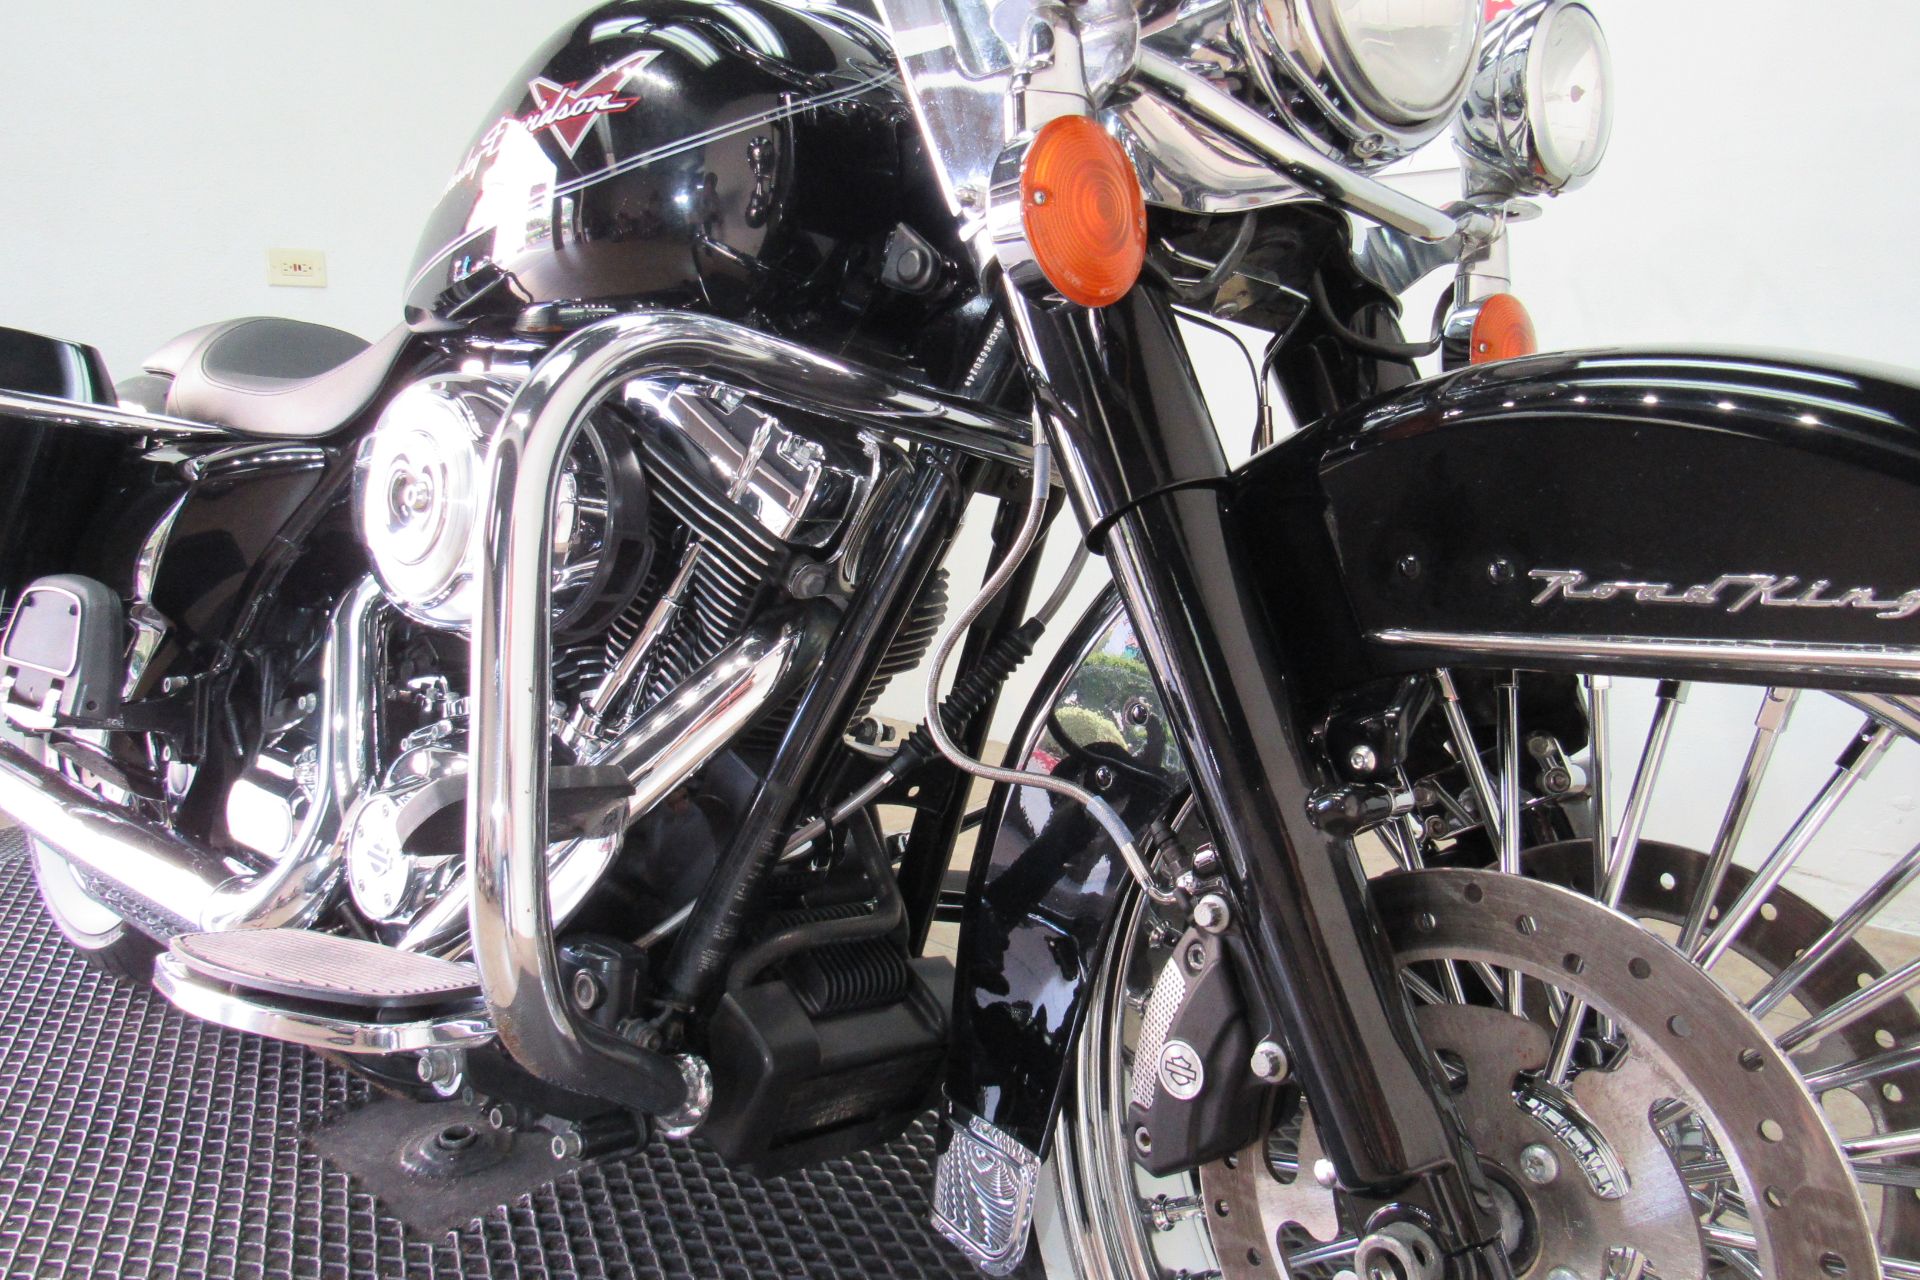 2012 Harley-Davidson Road King® in Temecula, California - Photo 15